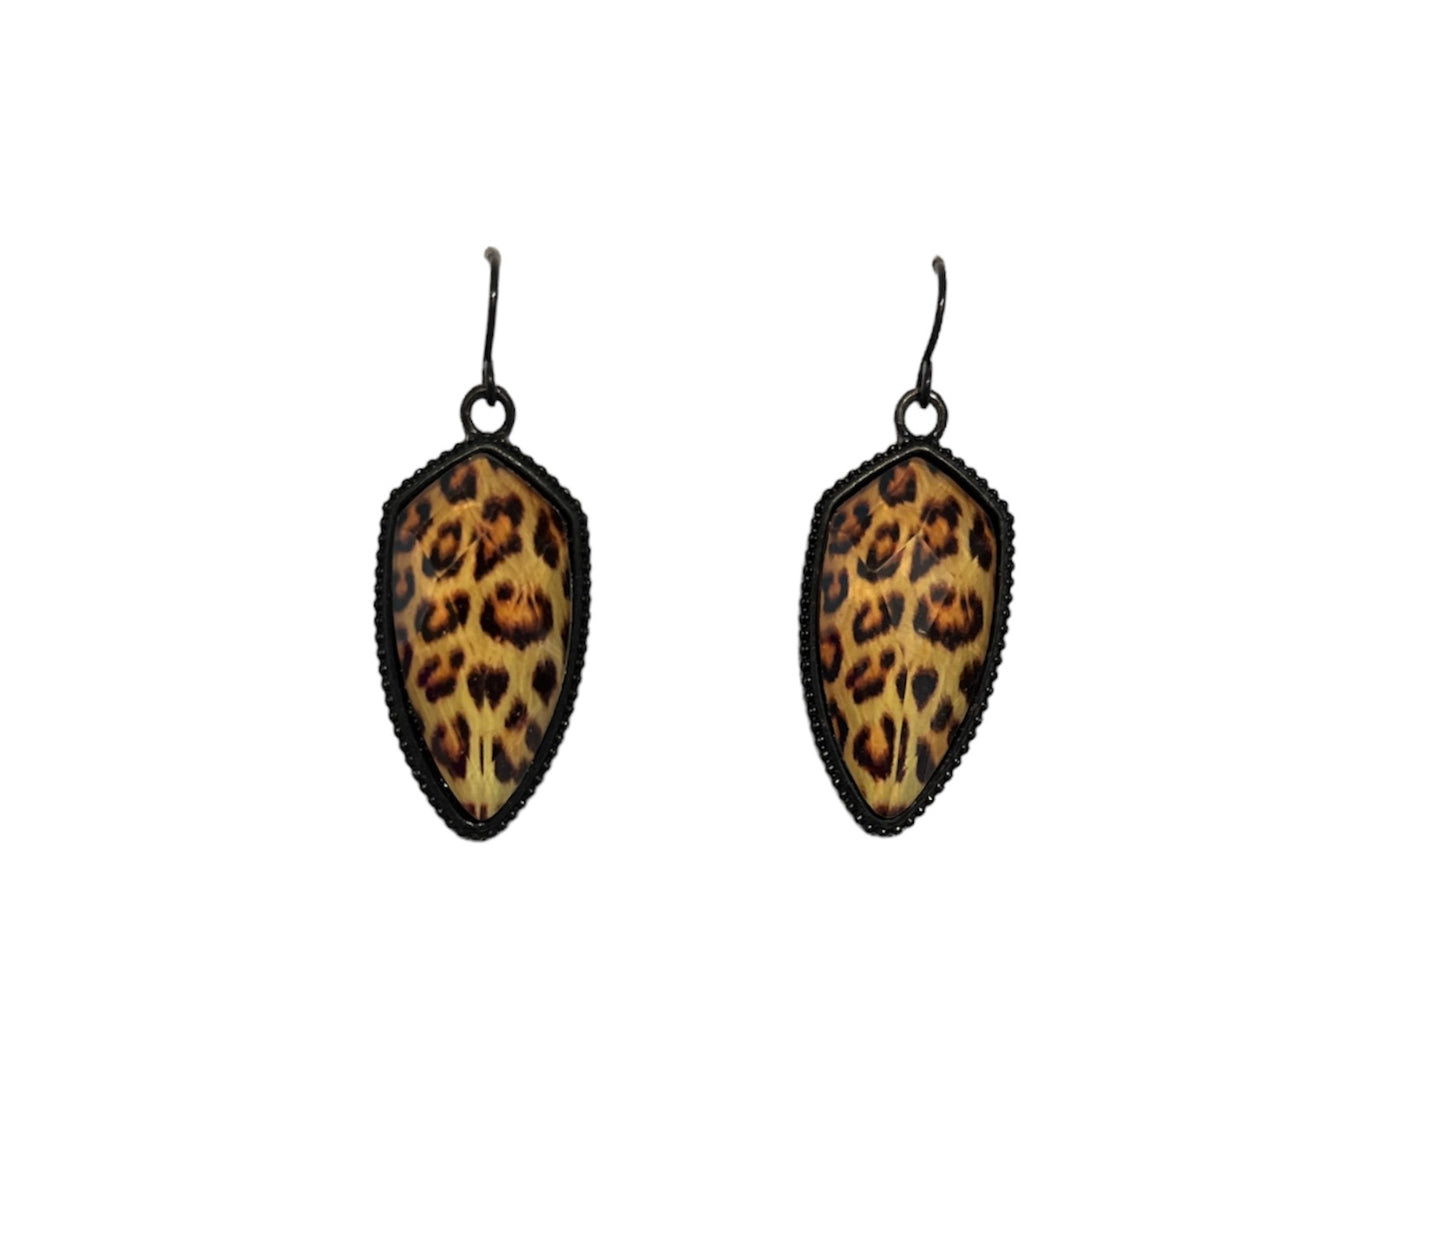 Black and Leopard Print Earrings